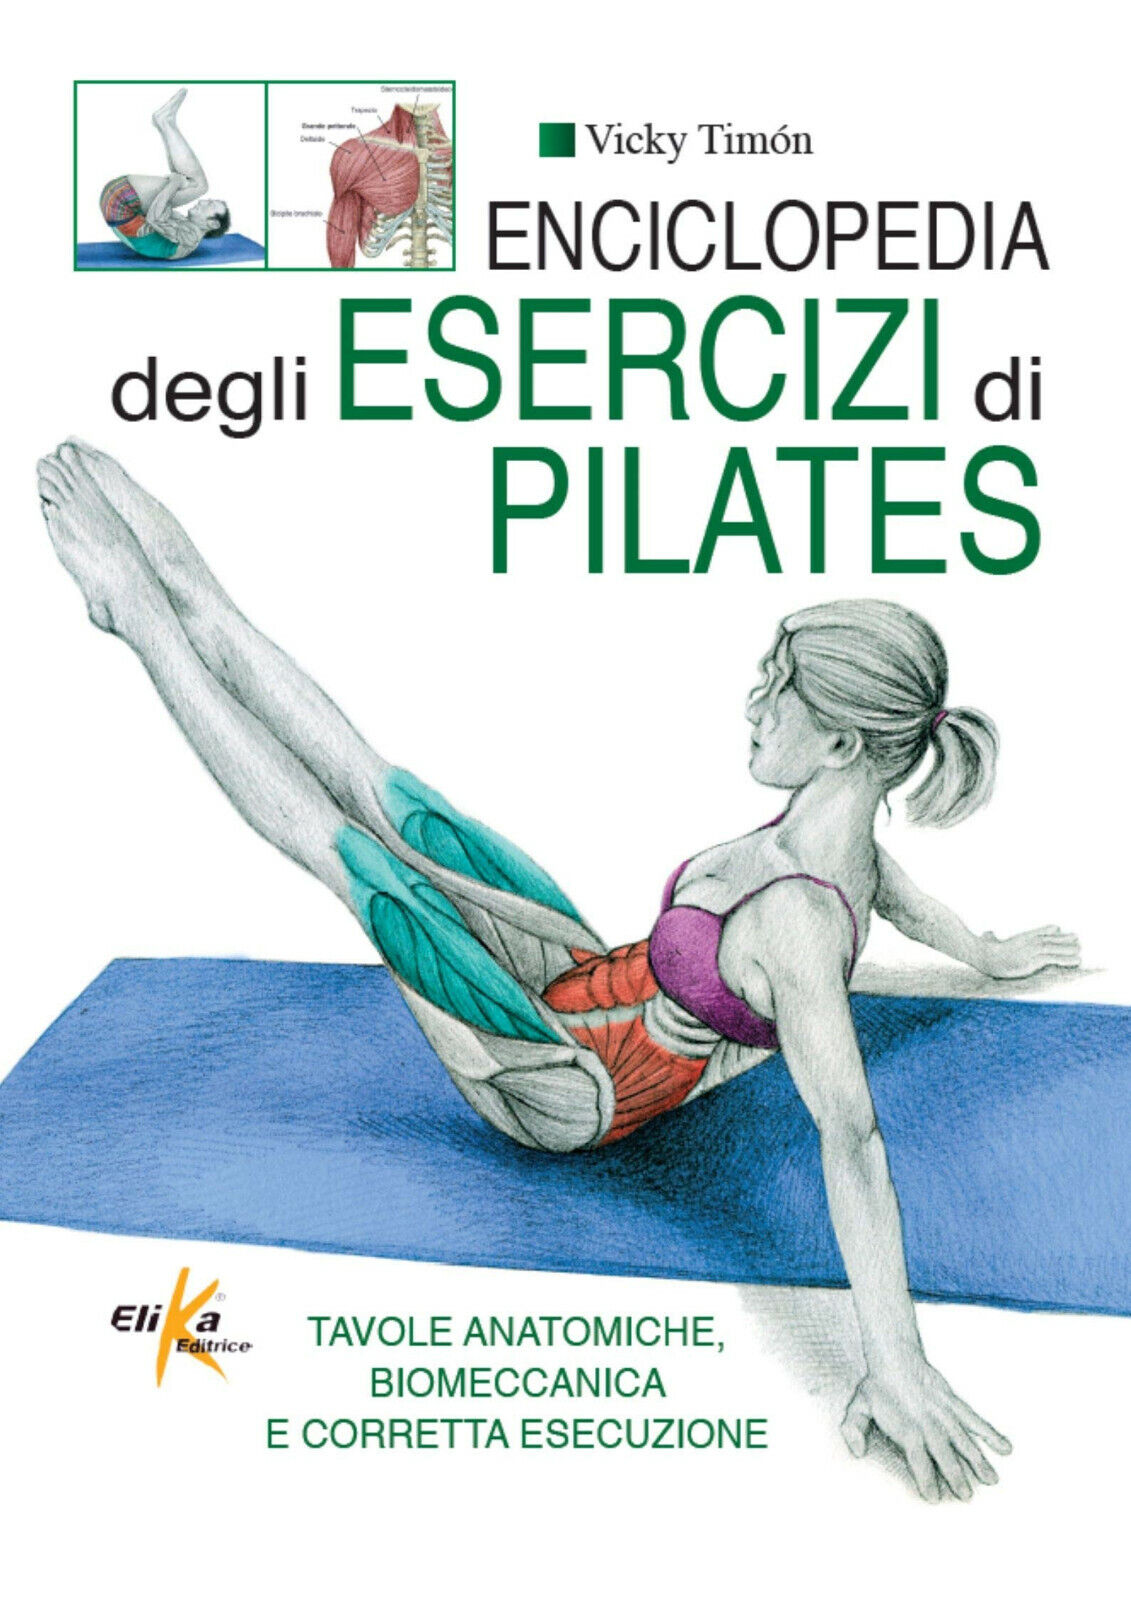 Enciclopedia degli esercizi di pilates - Vicky Timon - Elika, 2014